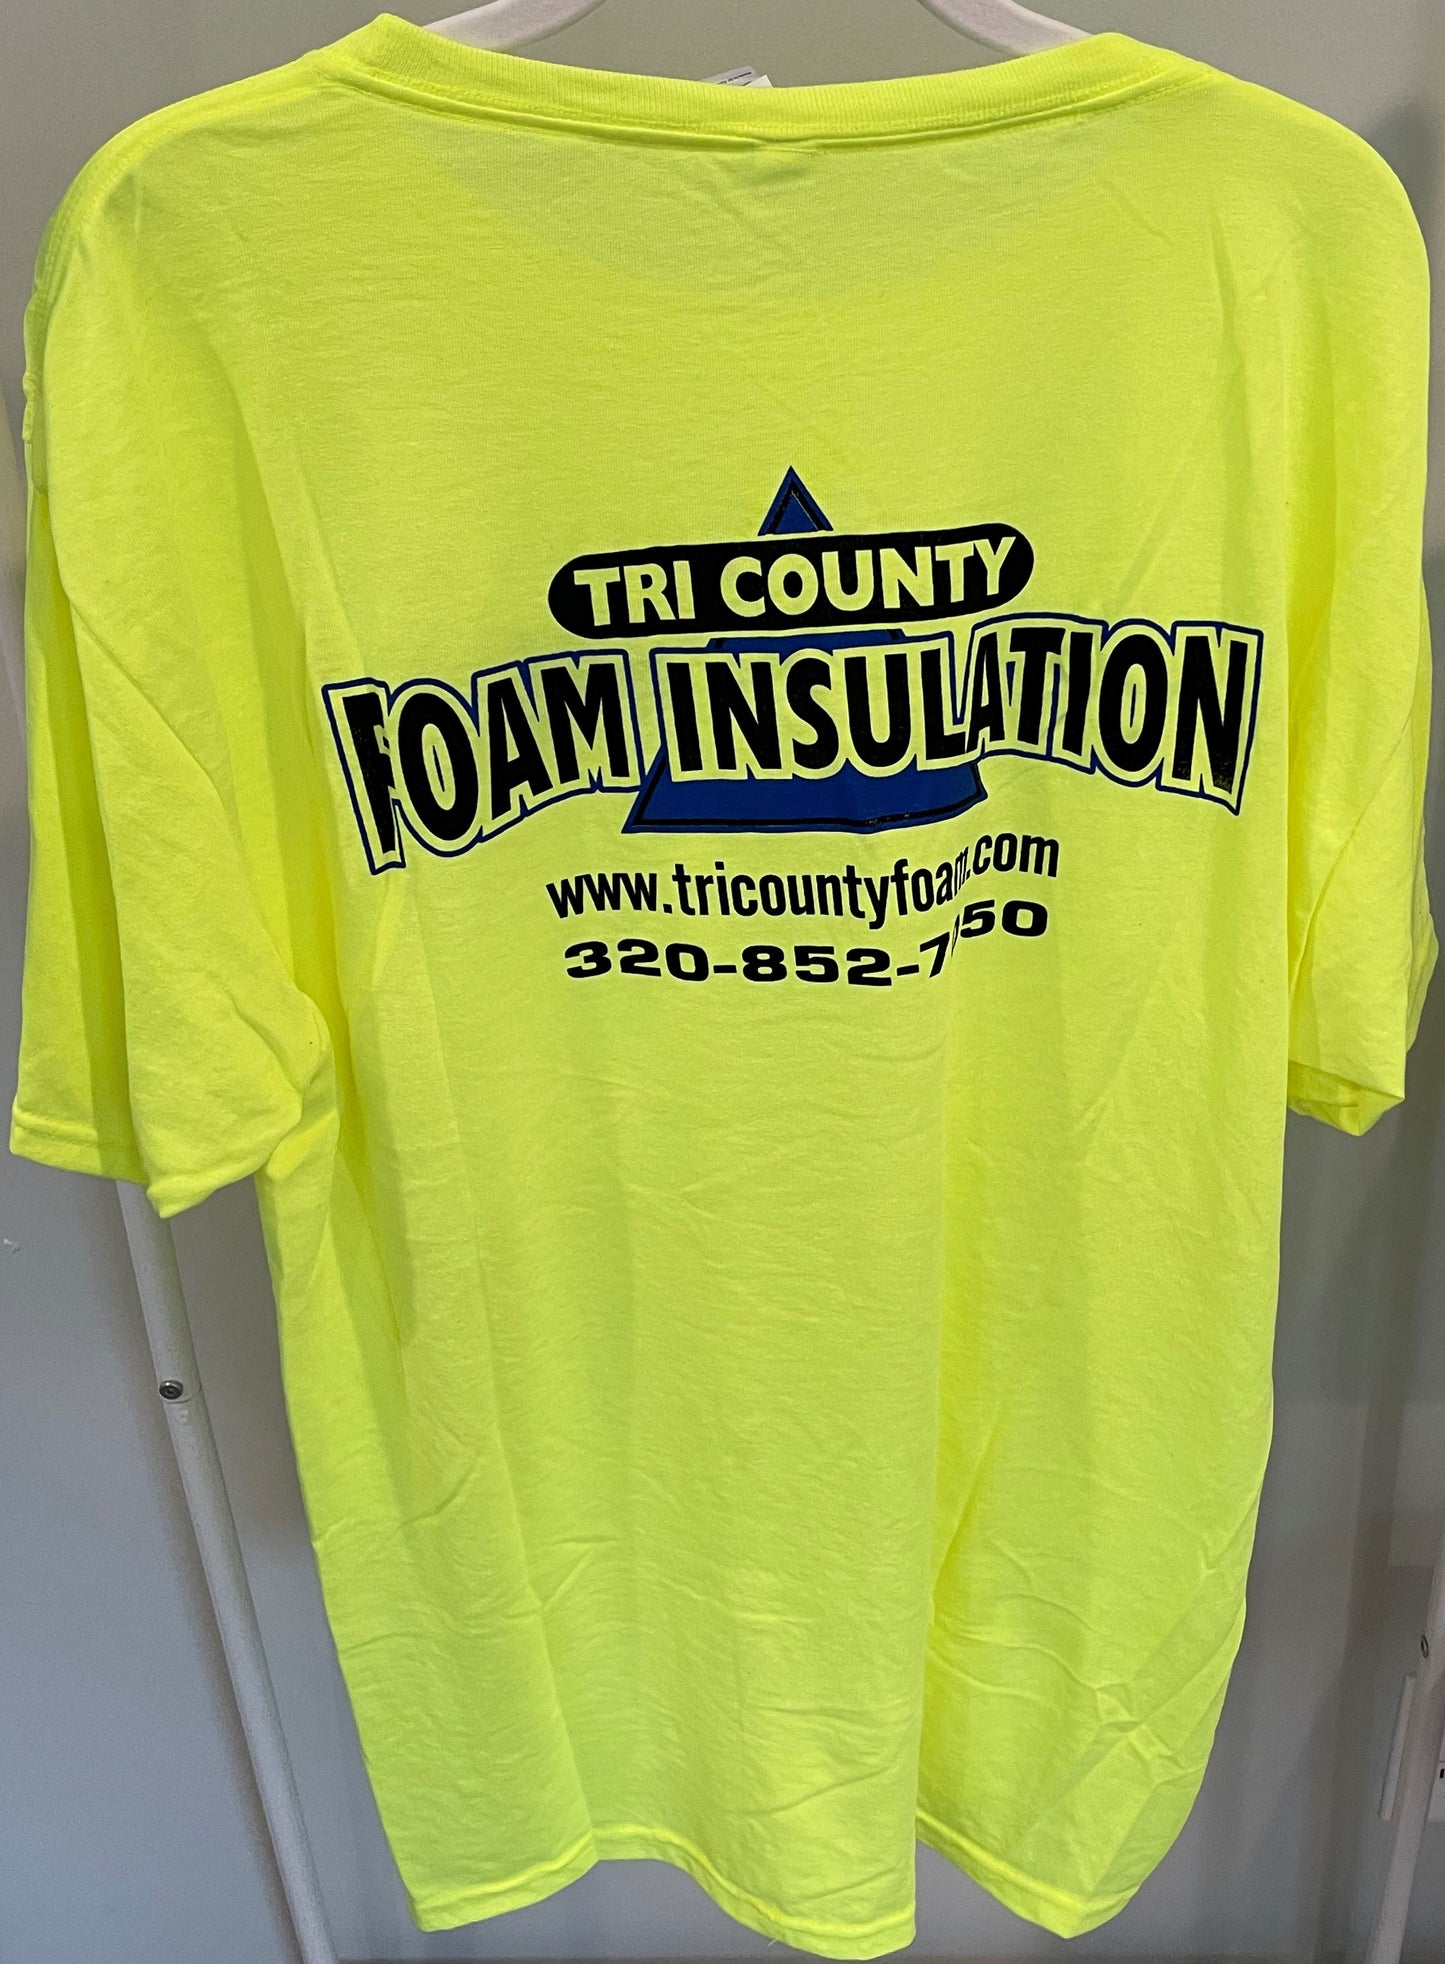 Tri County Foam Insulation Short Sleeve Tee Shirt